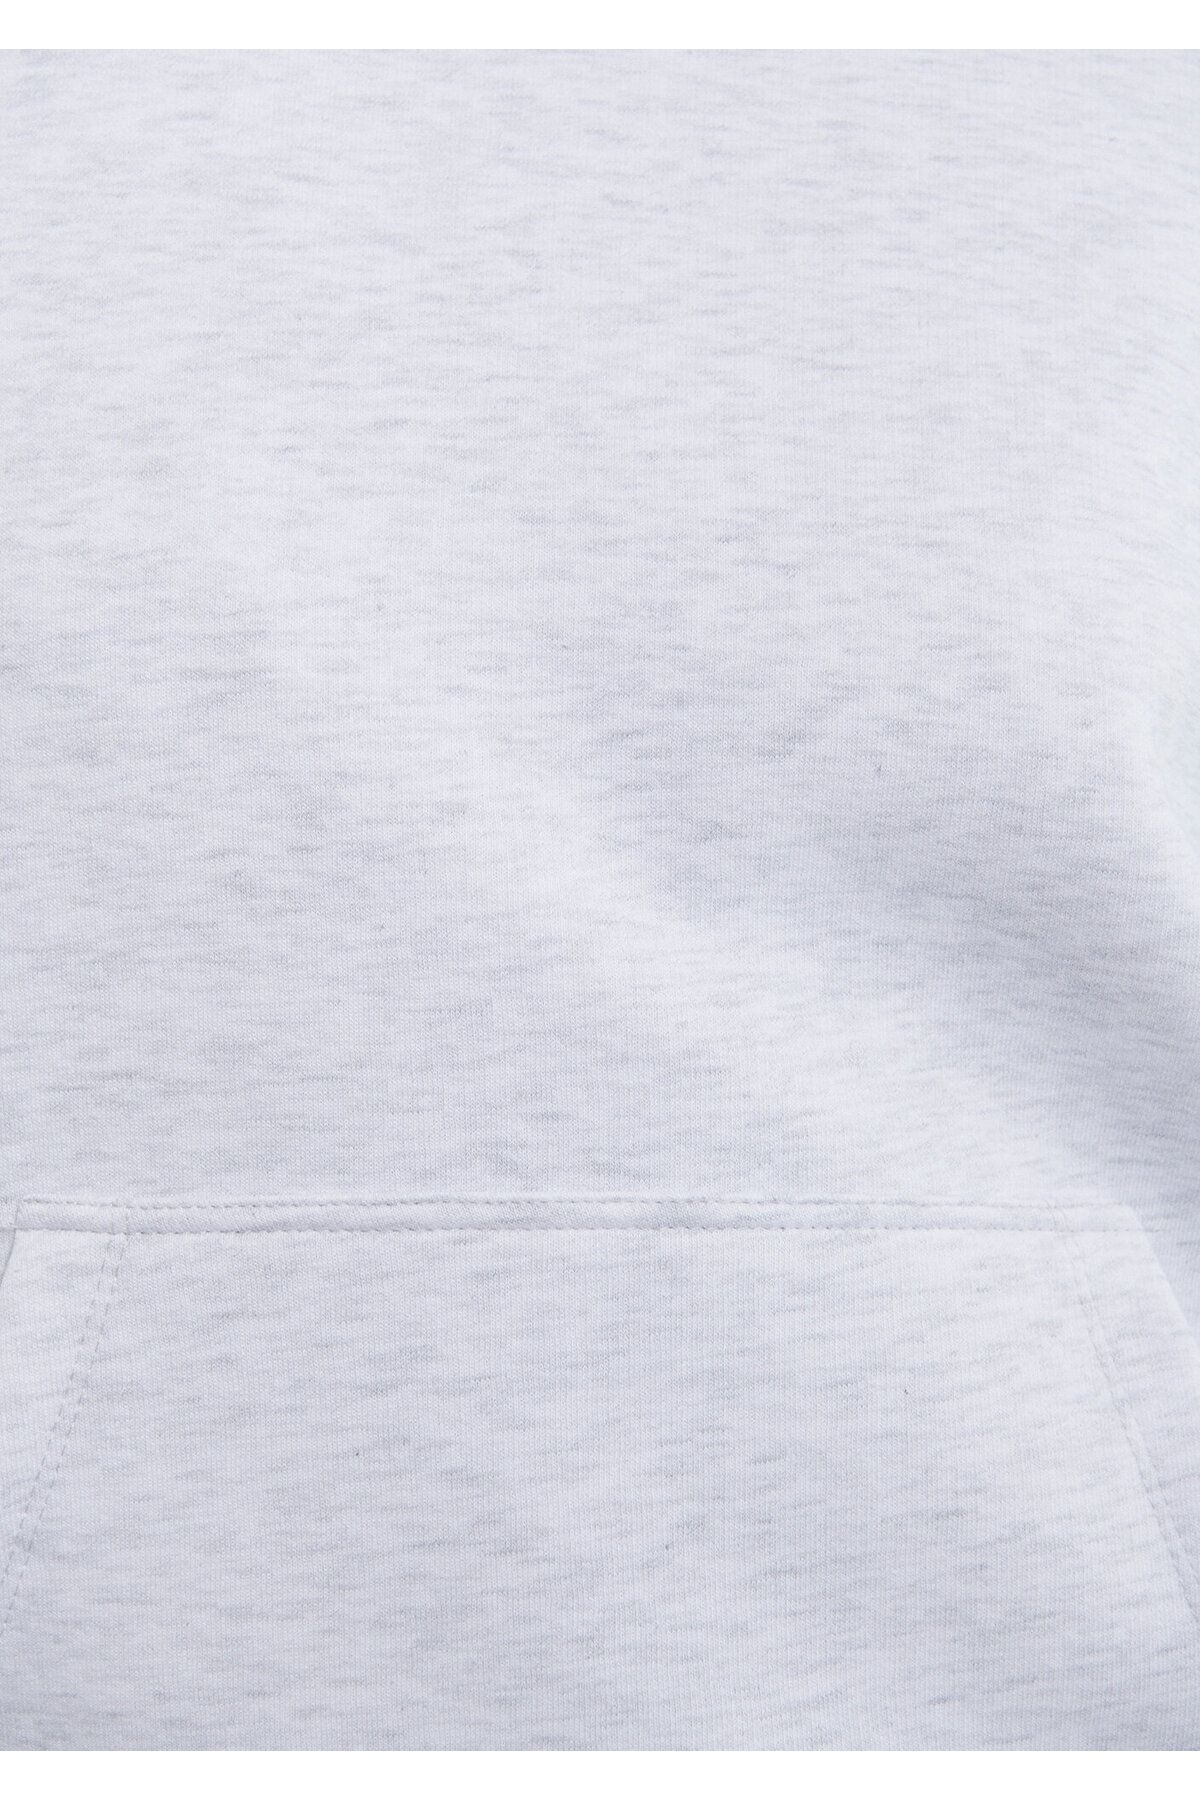 Mavi پیراهن اصلی خاکستری روشن 167299-85438